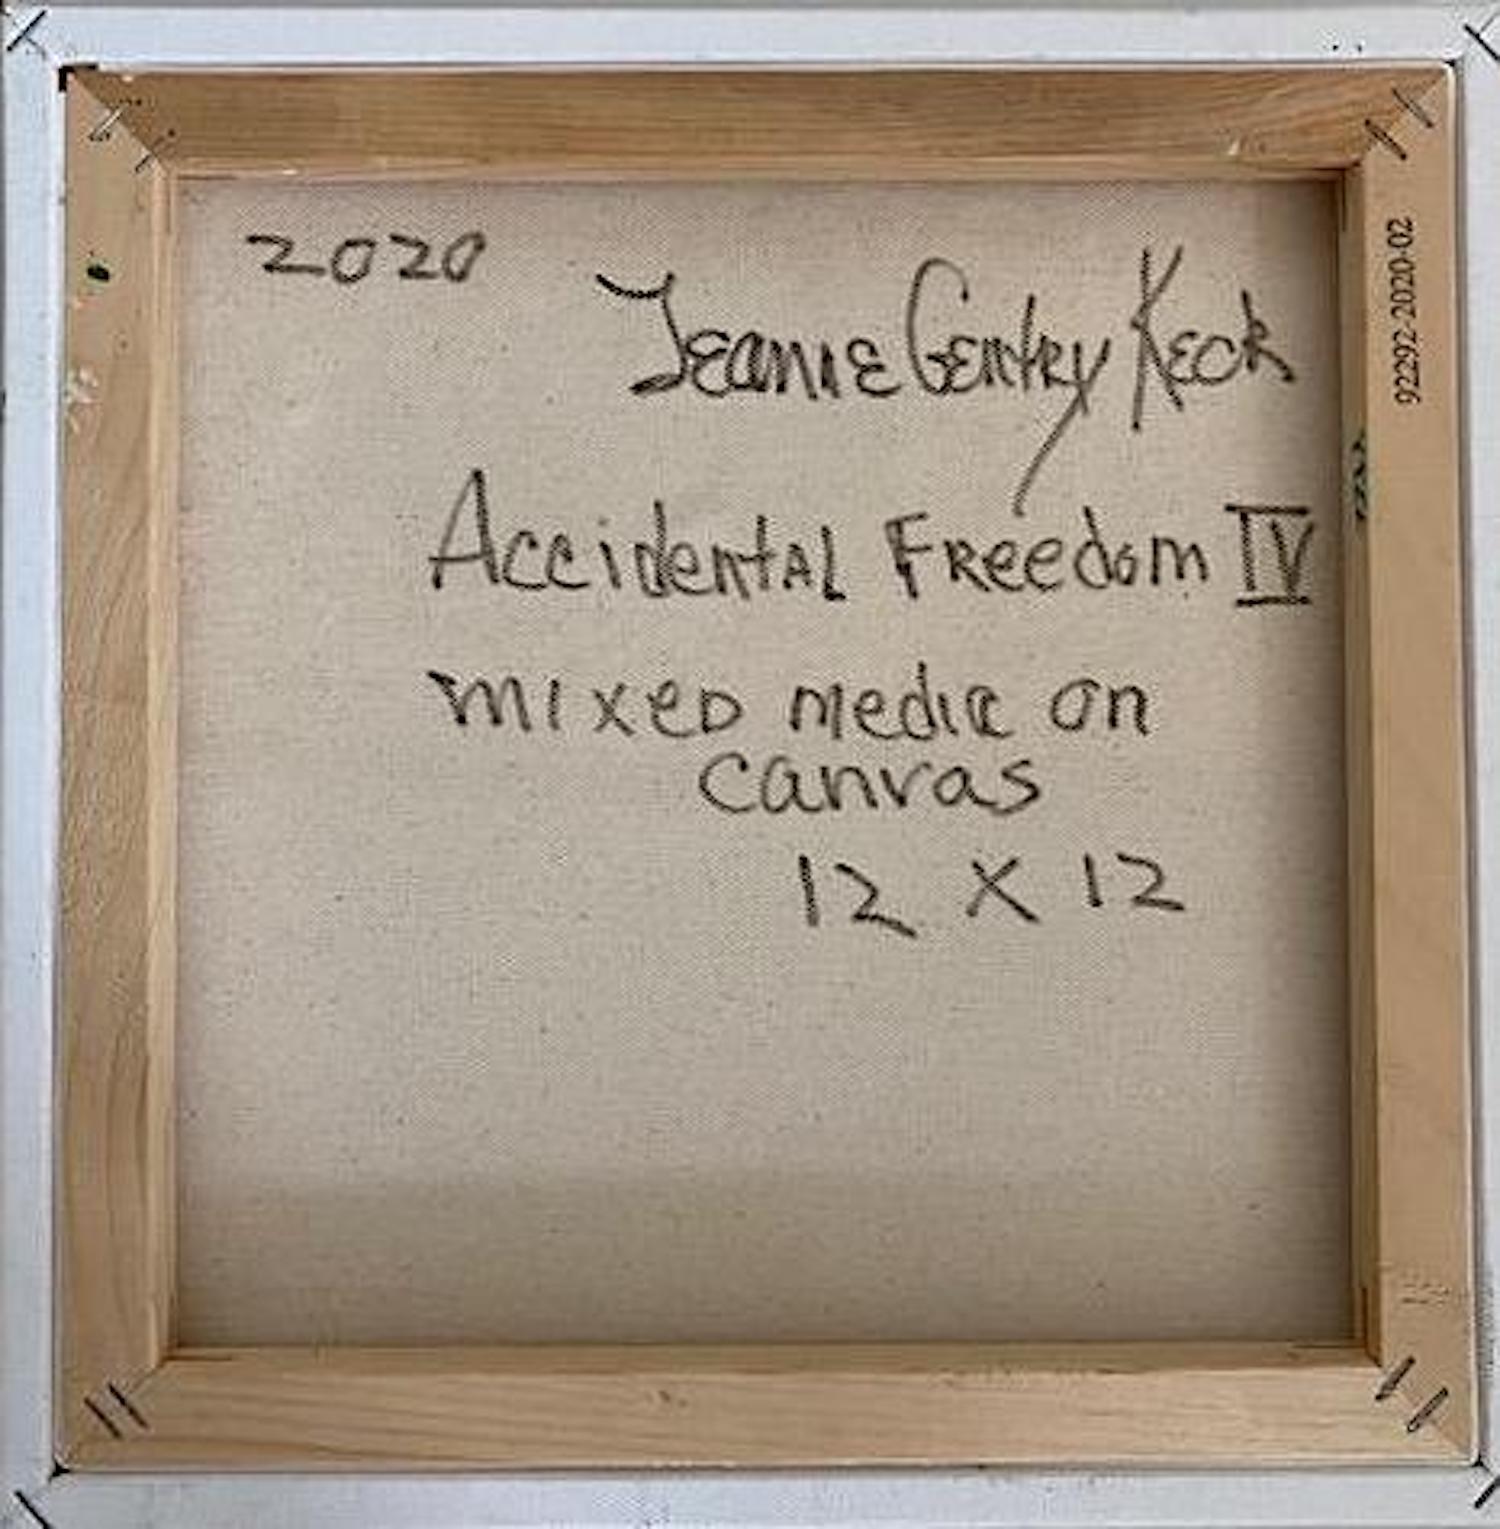 Mixed Media auf Leinwand, accidental Freedom IV, Jeanne Gentry Keck, 2020 im Angebot 2